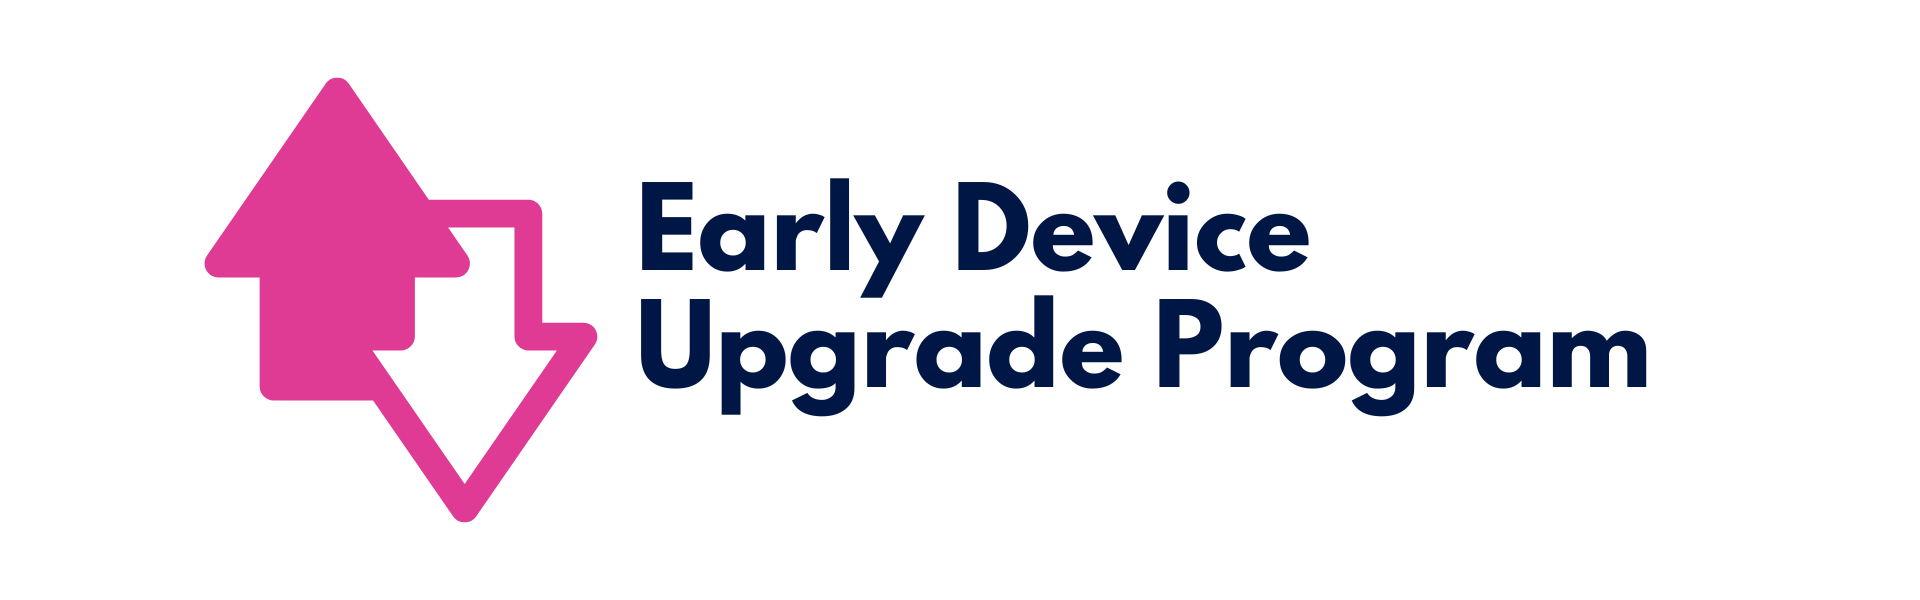 Early Device Upgrade Program - Website Banner - Bolt Mobile